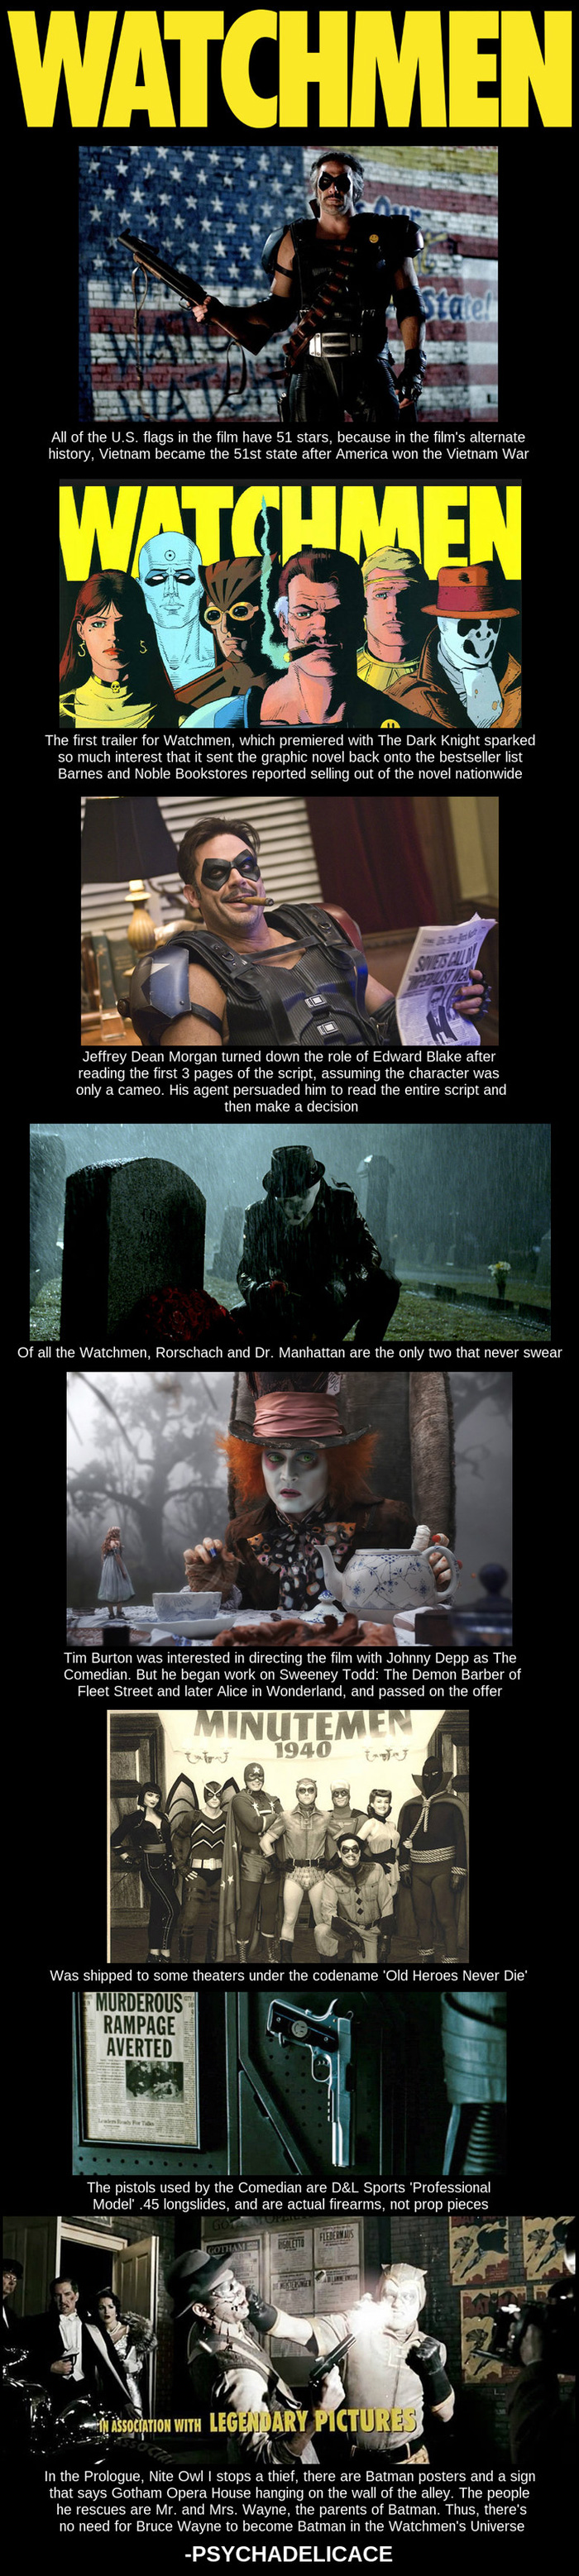 Watchmen Facts